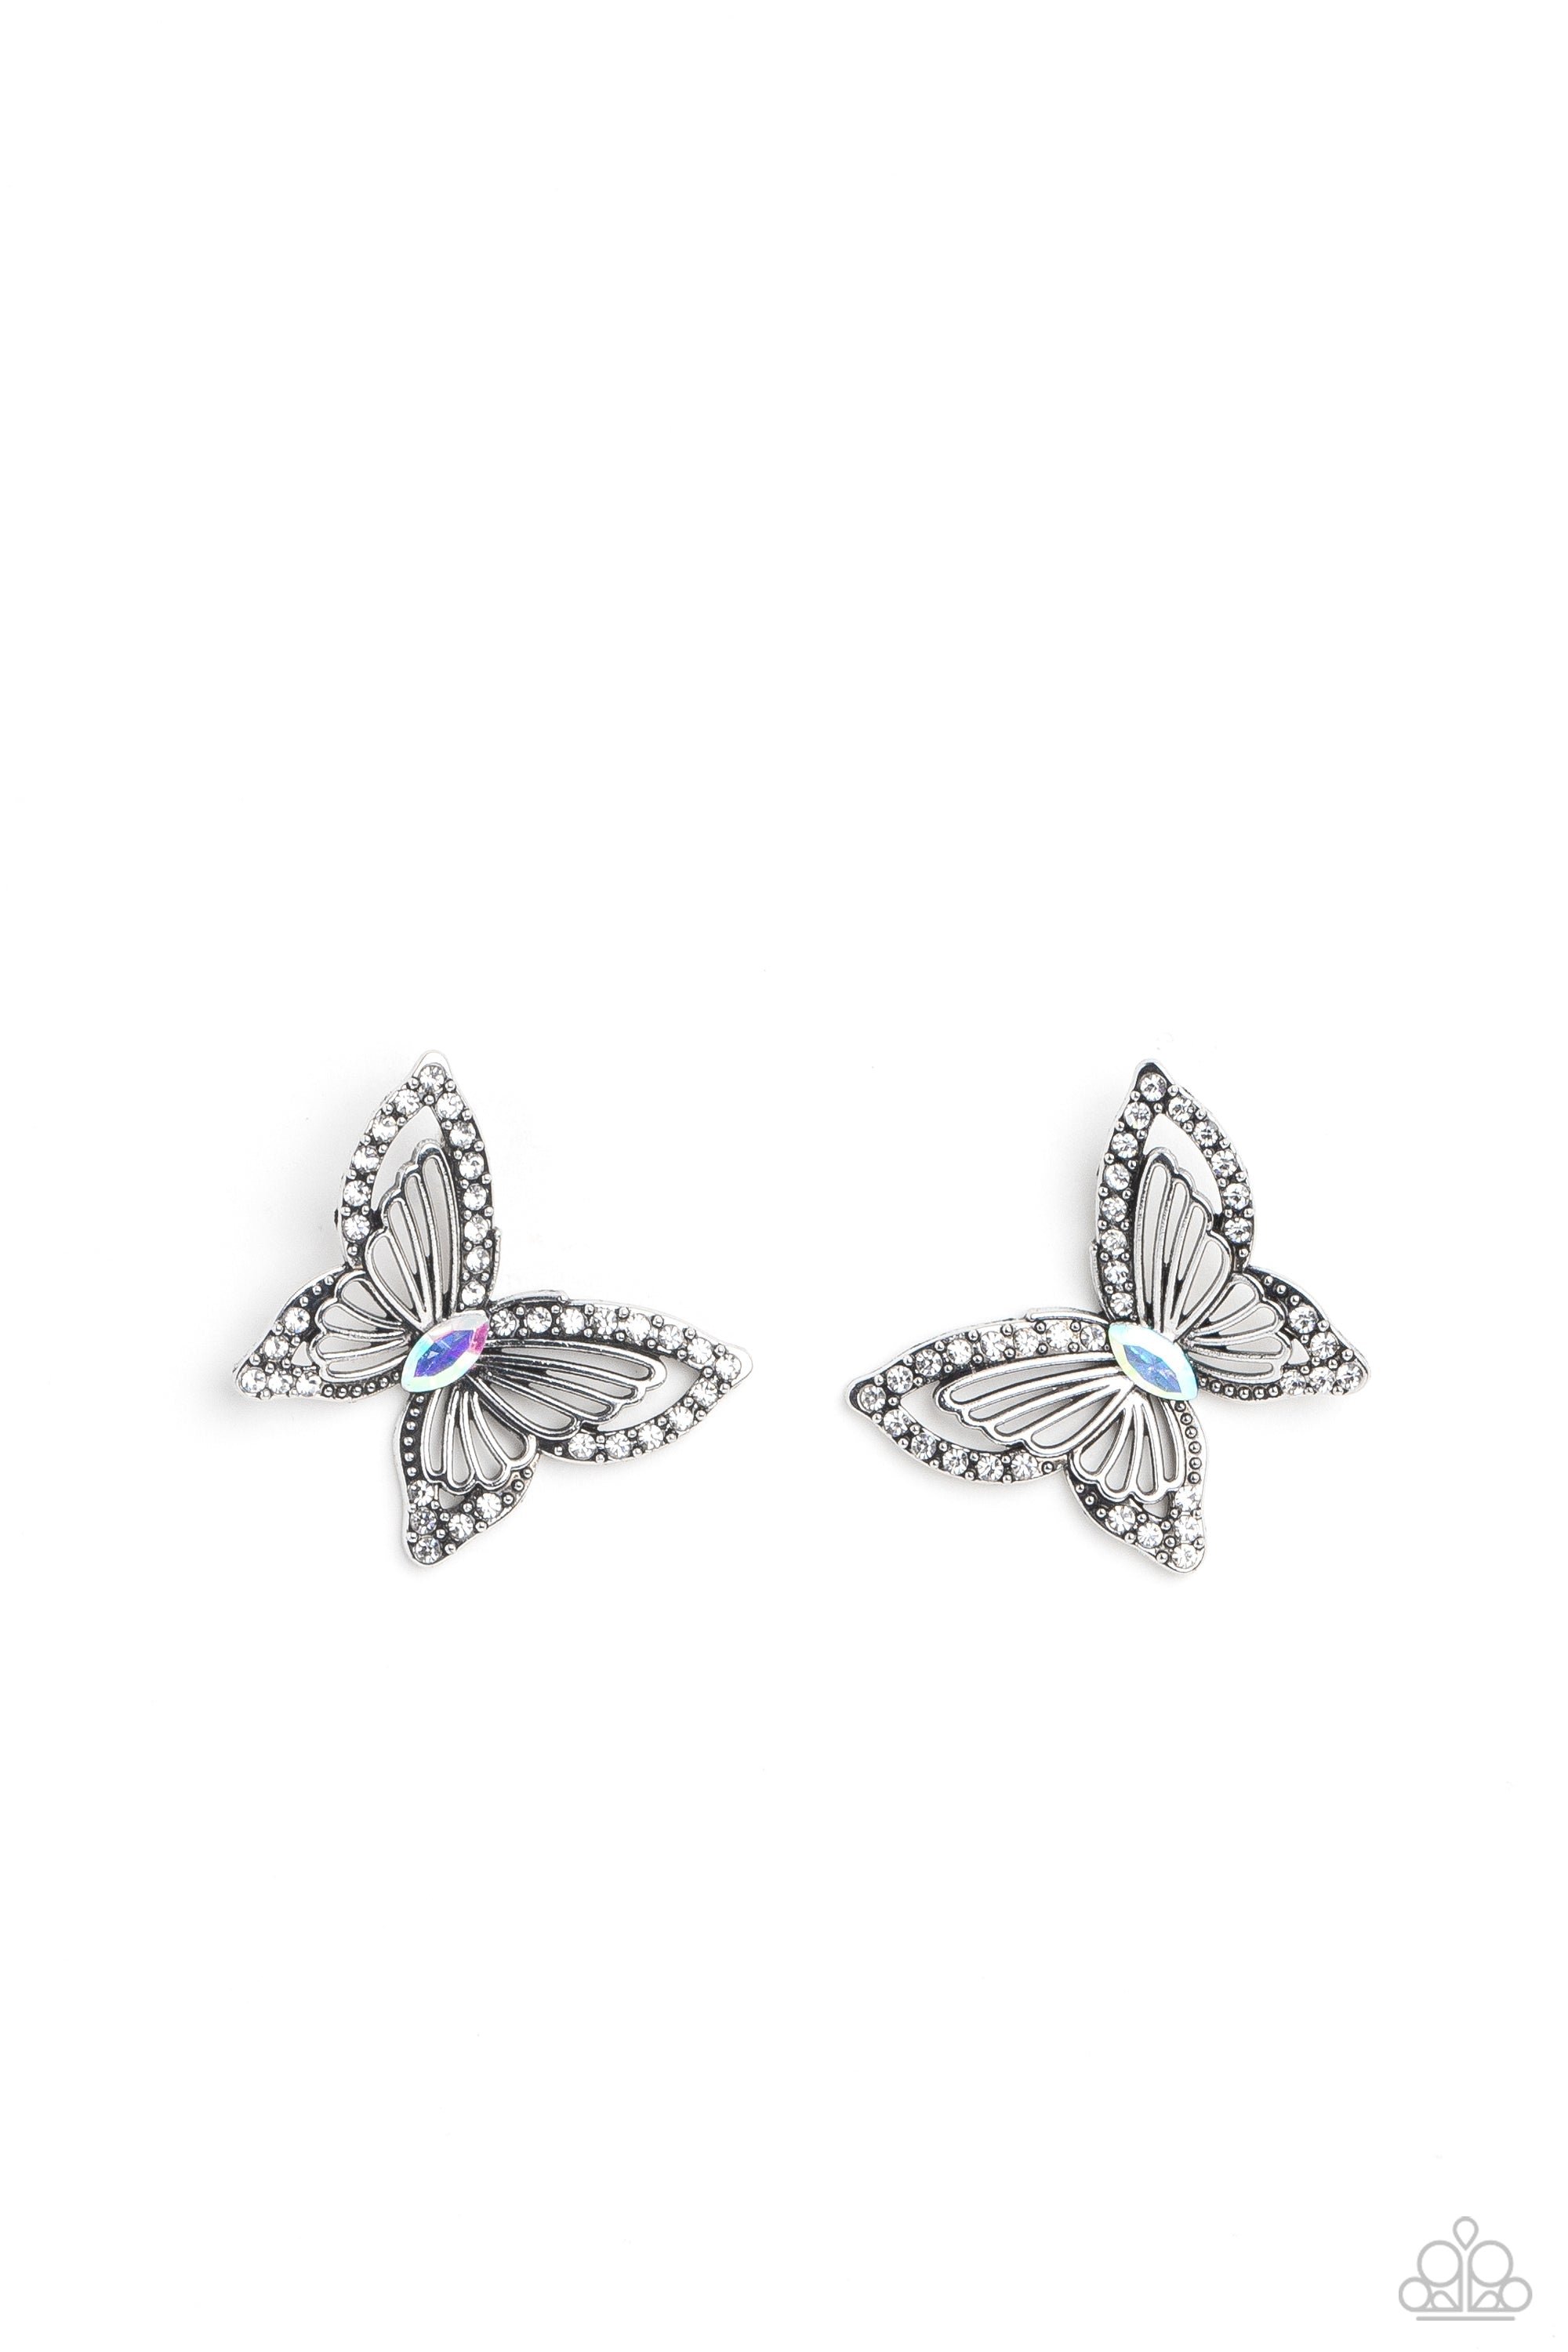 Wispy Wings Multi & White Gem Butterfly Earrings - Paparazzi Accessories- lightbox - CarasShop.com - $5 Jewelry by Cara Jewels